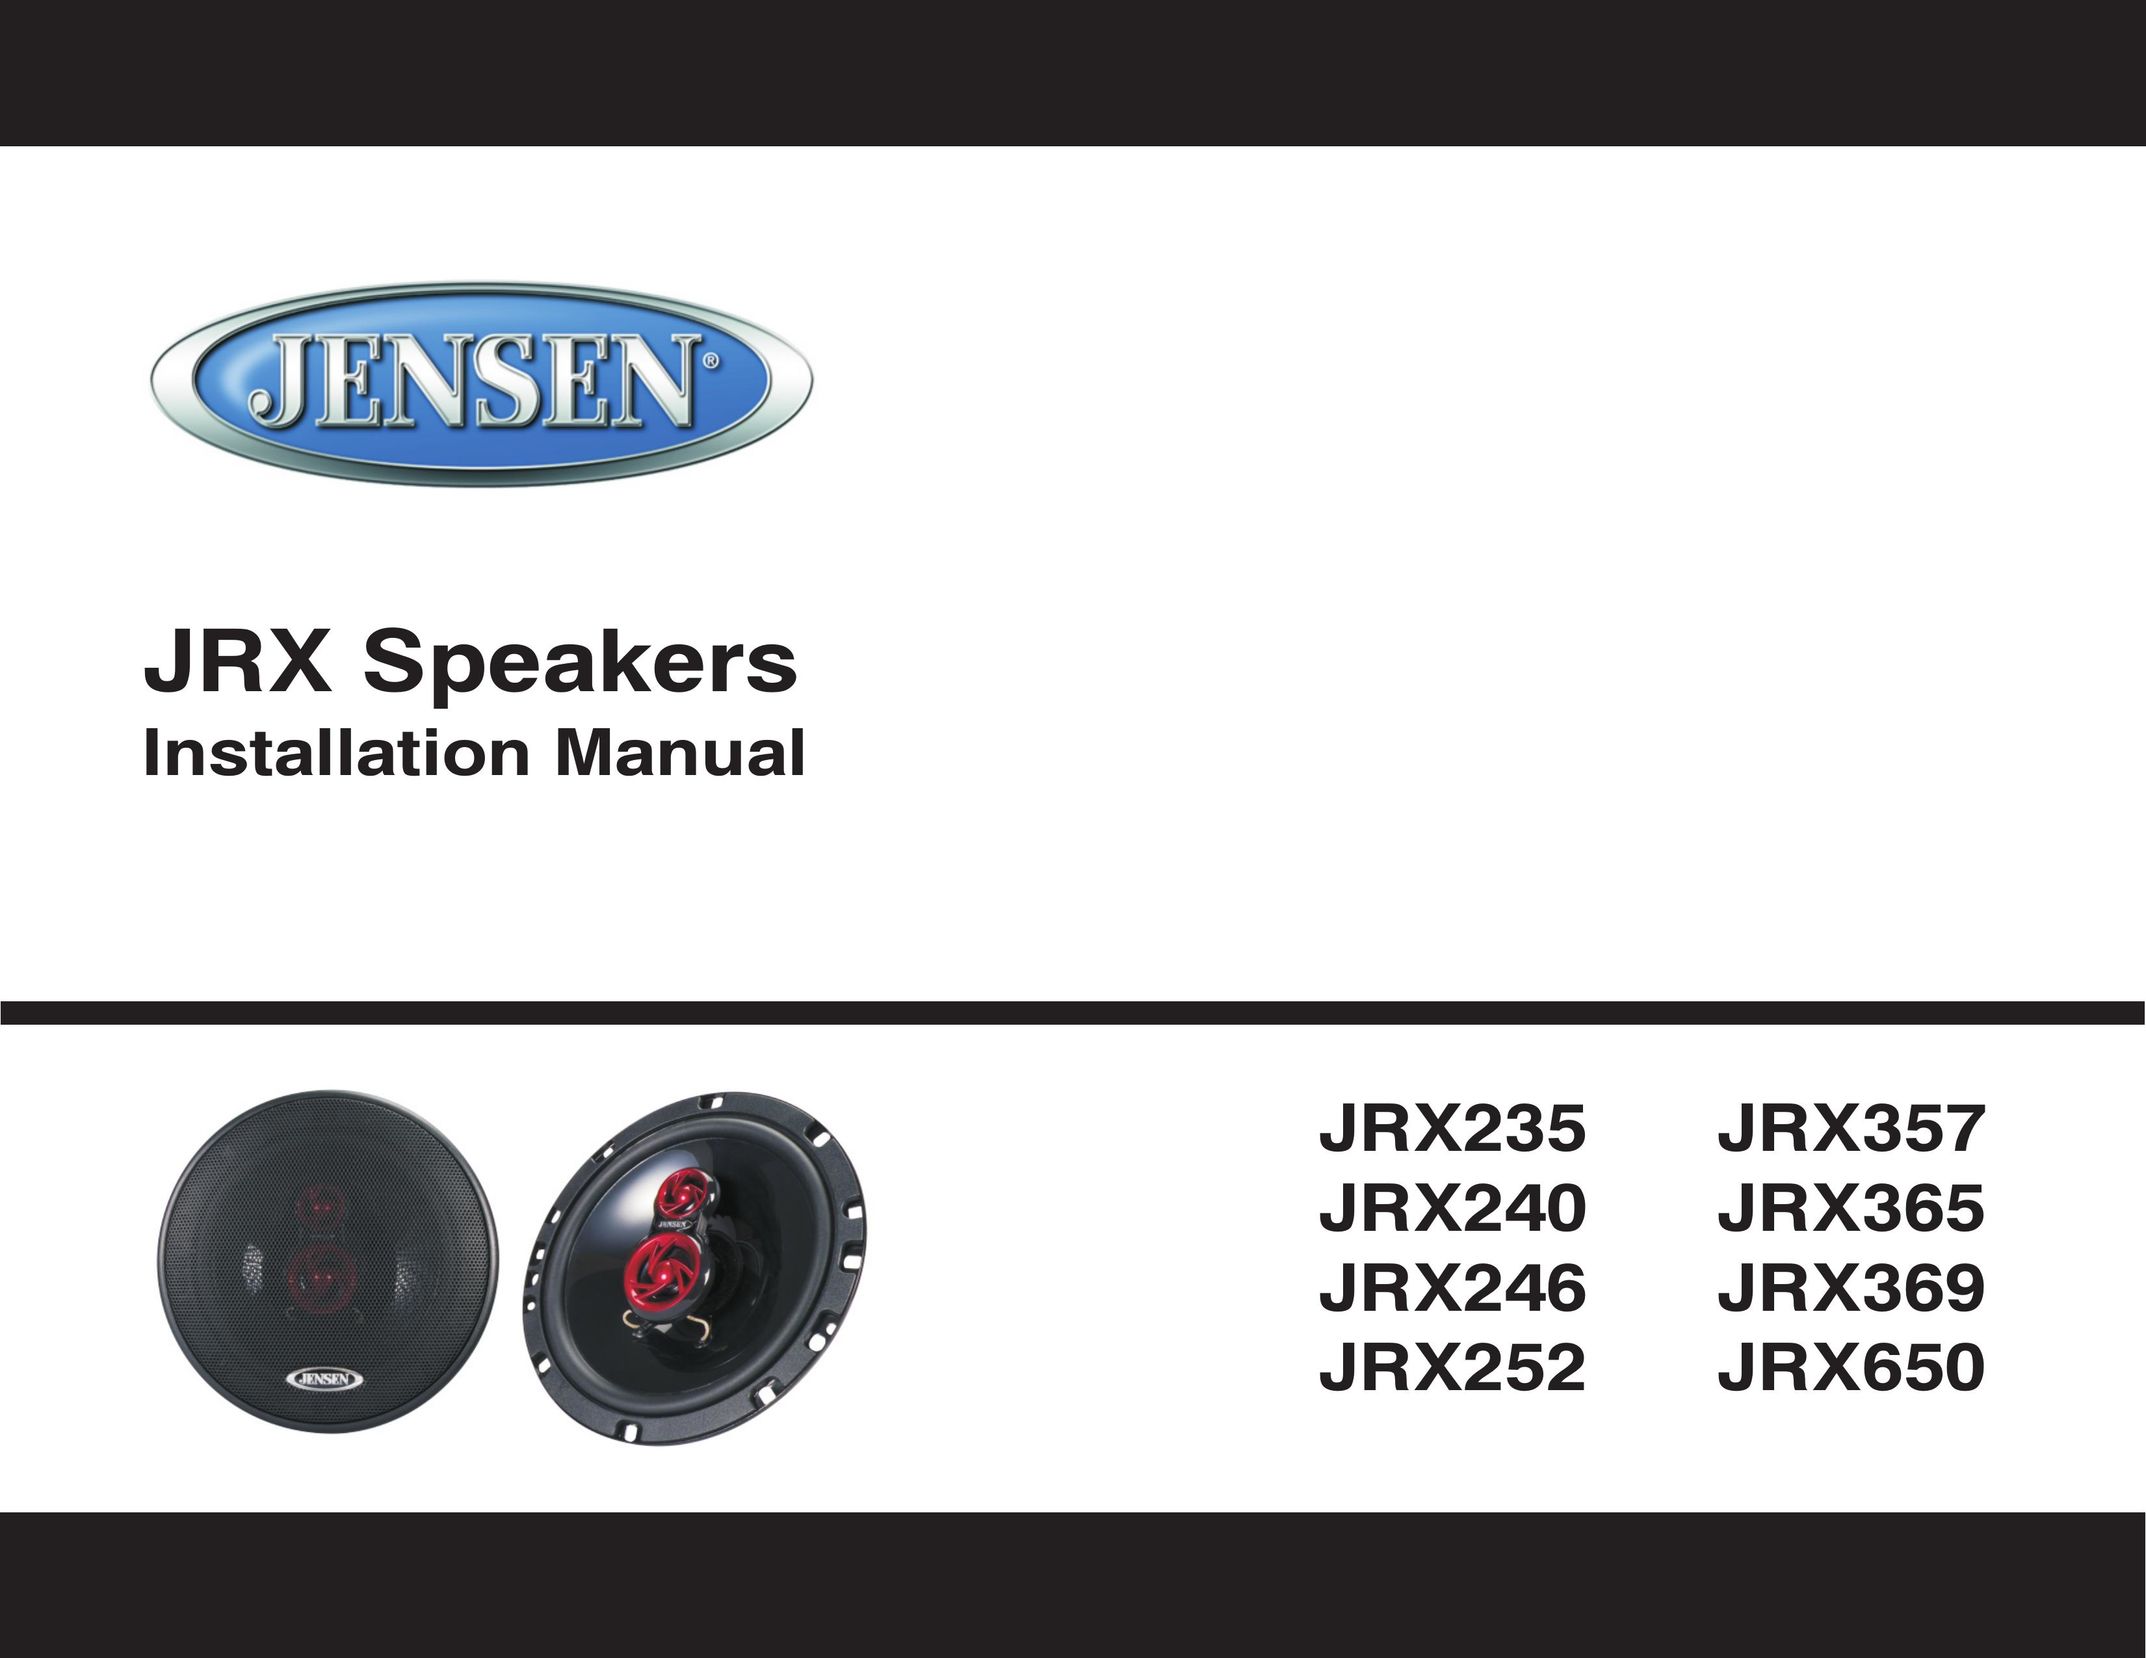 Jensen JRX365 Car Speaker User Manual